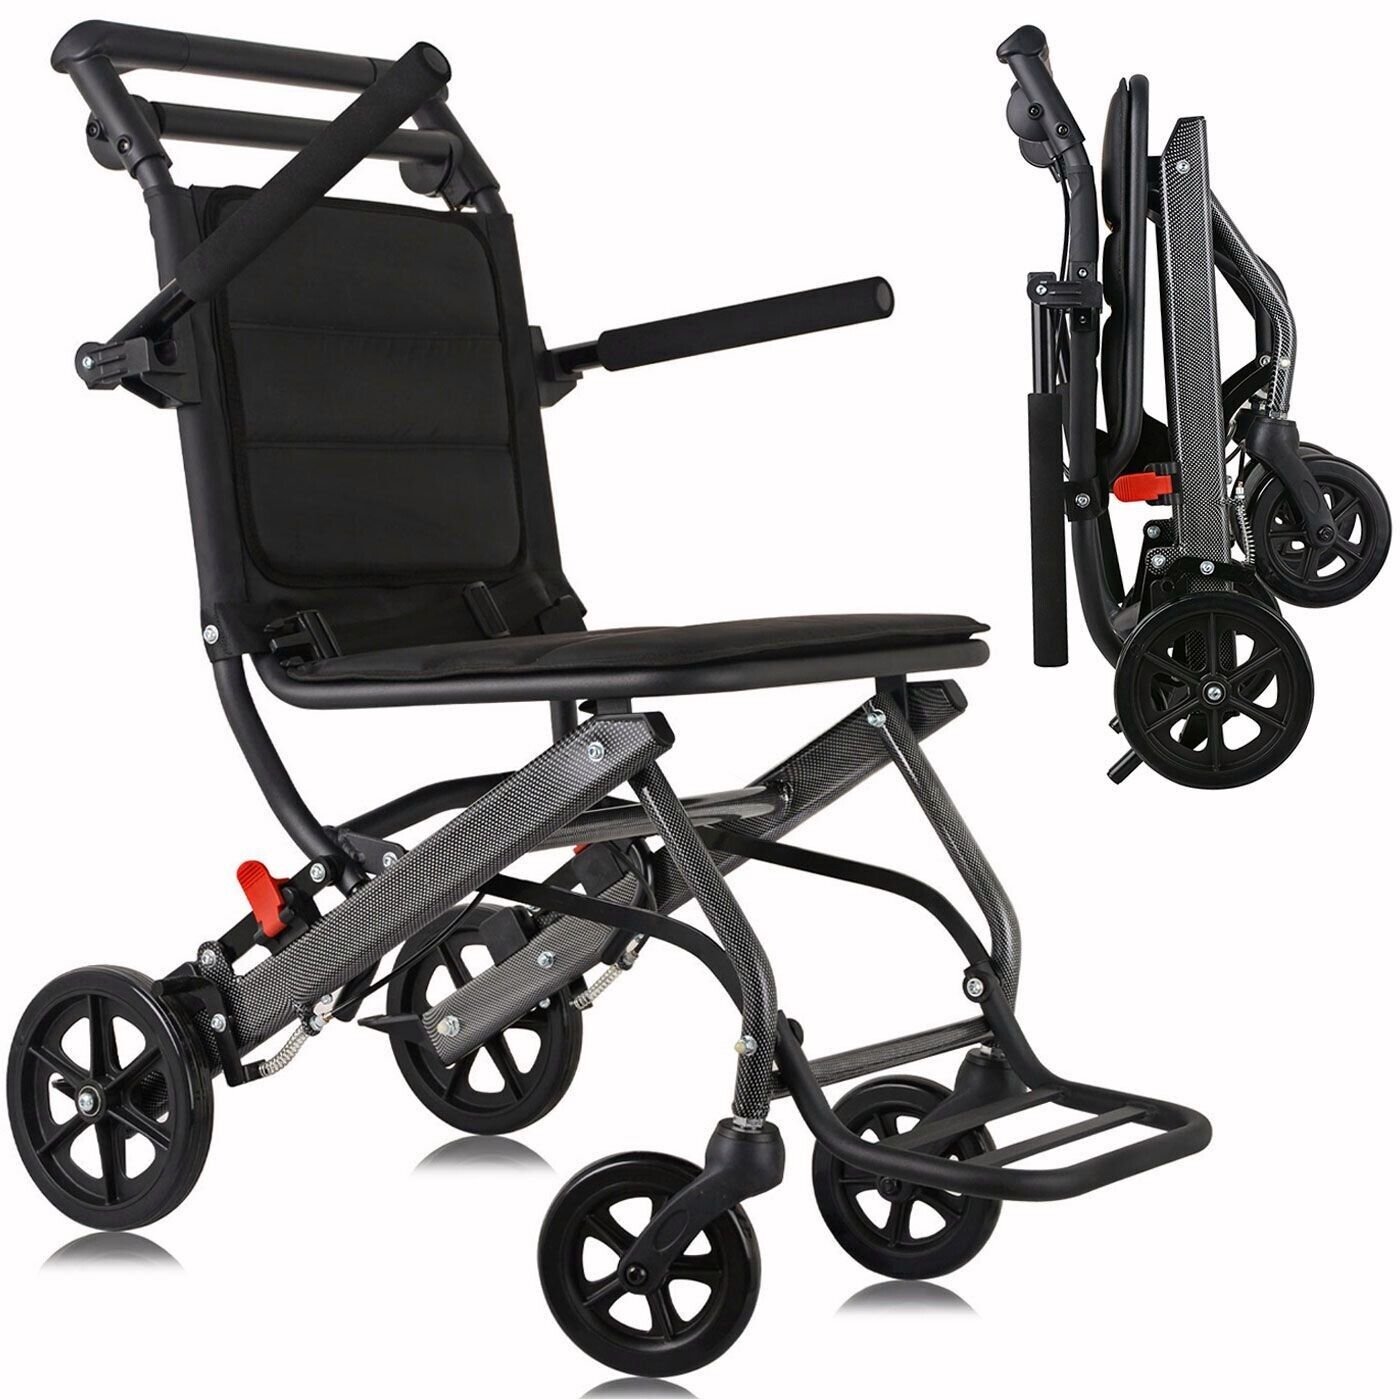 Aluminium-Travel-Wheelchair-Lightweight